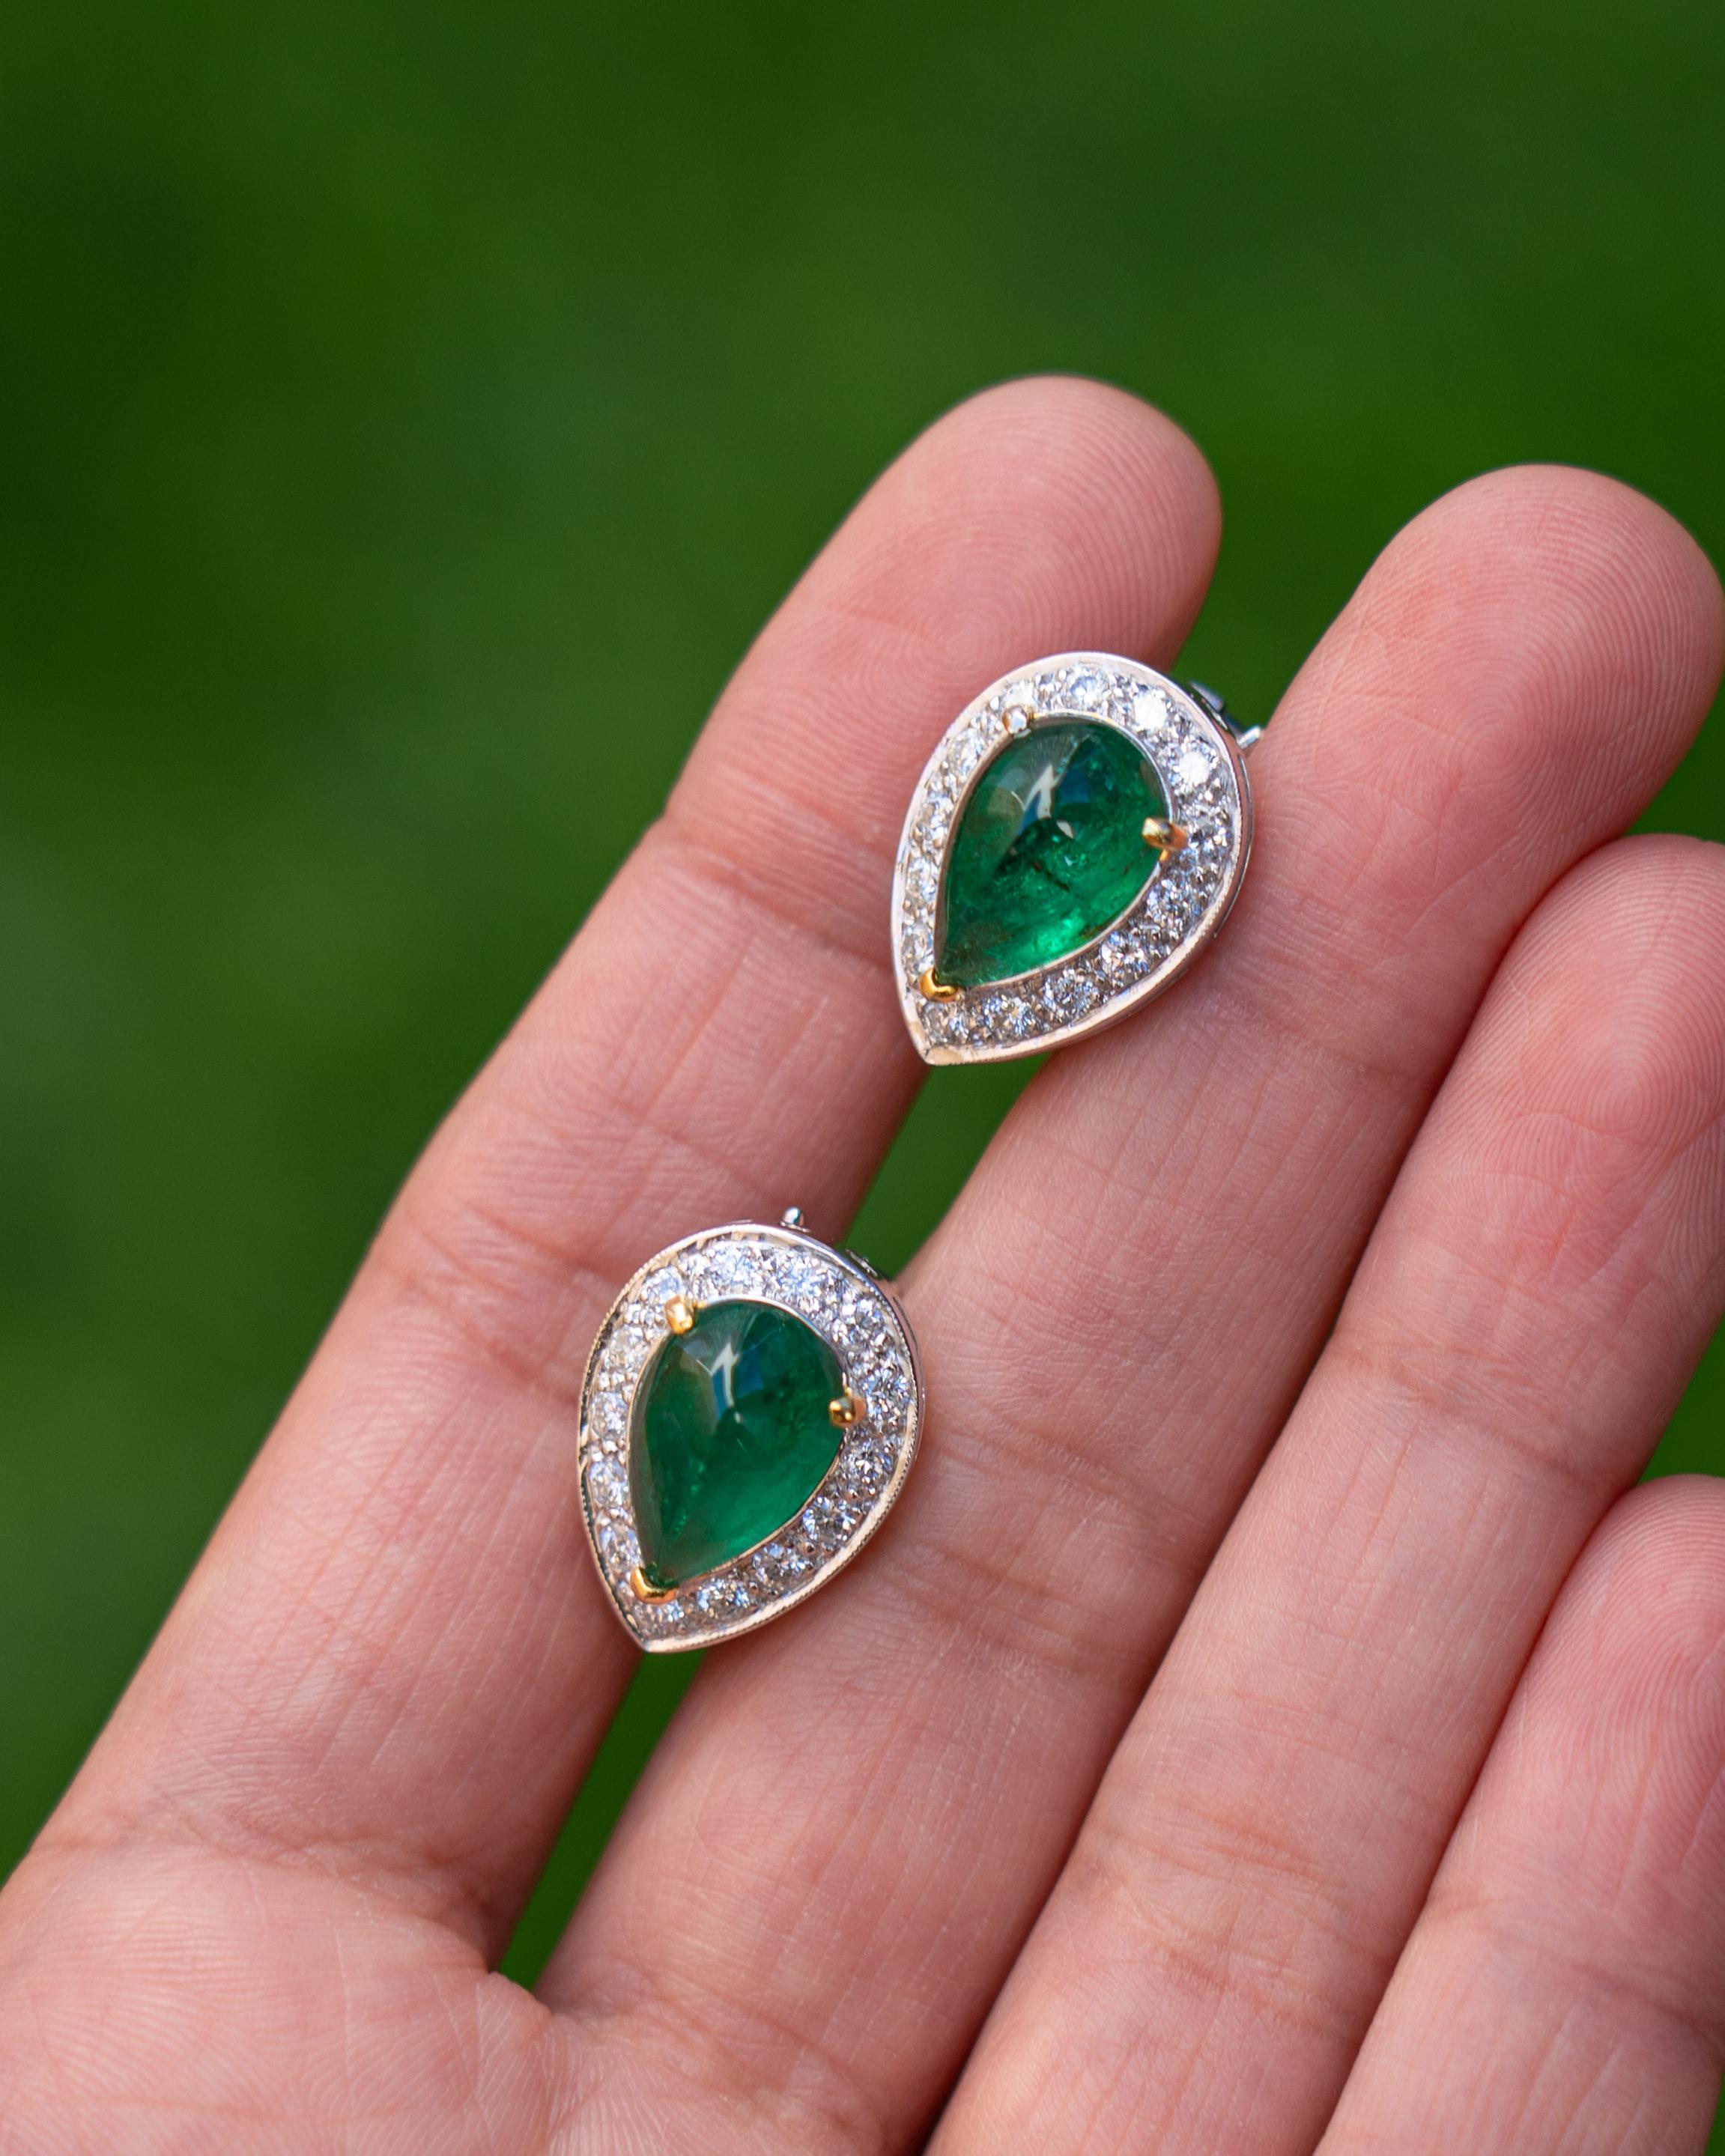 12 carat diamond earrings